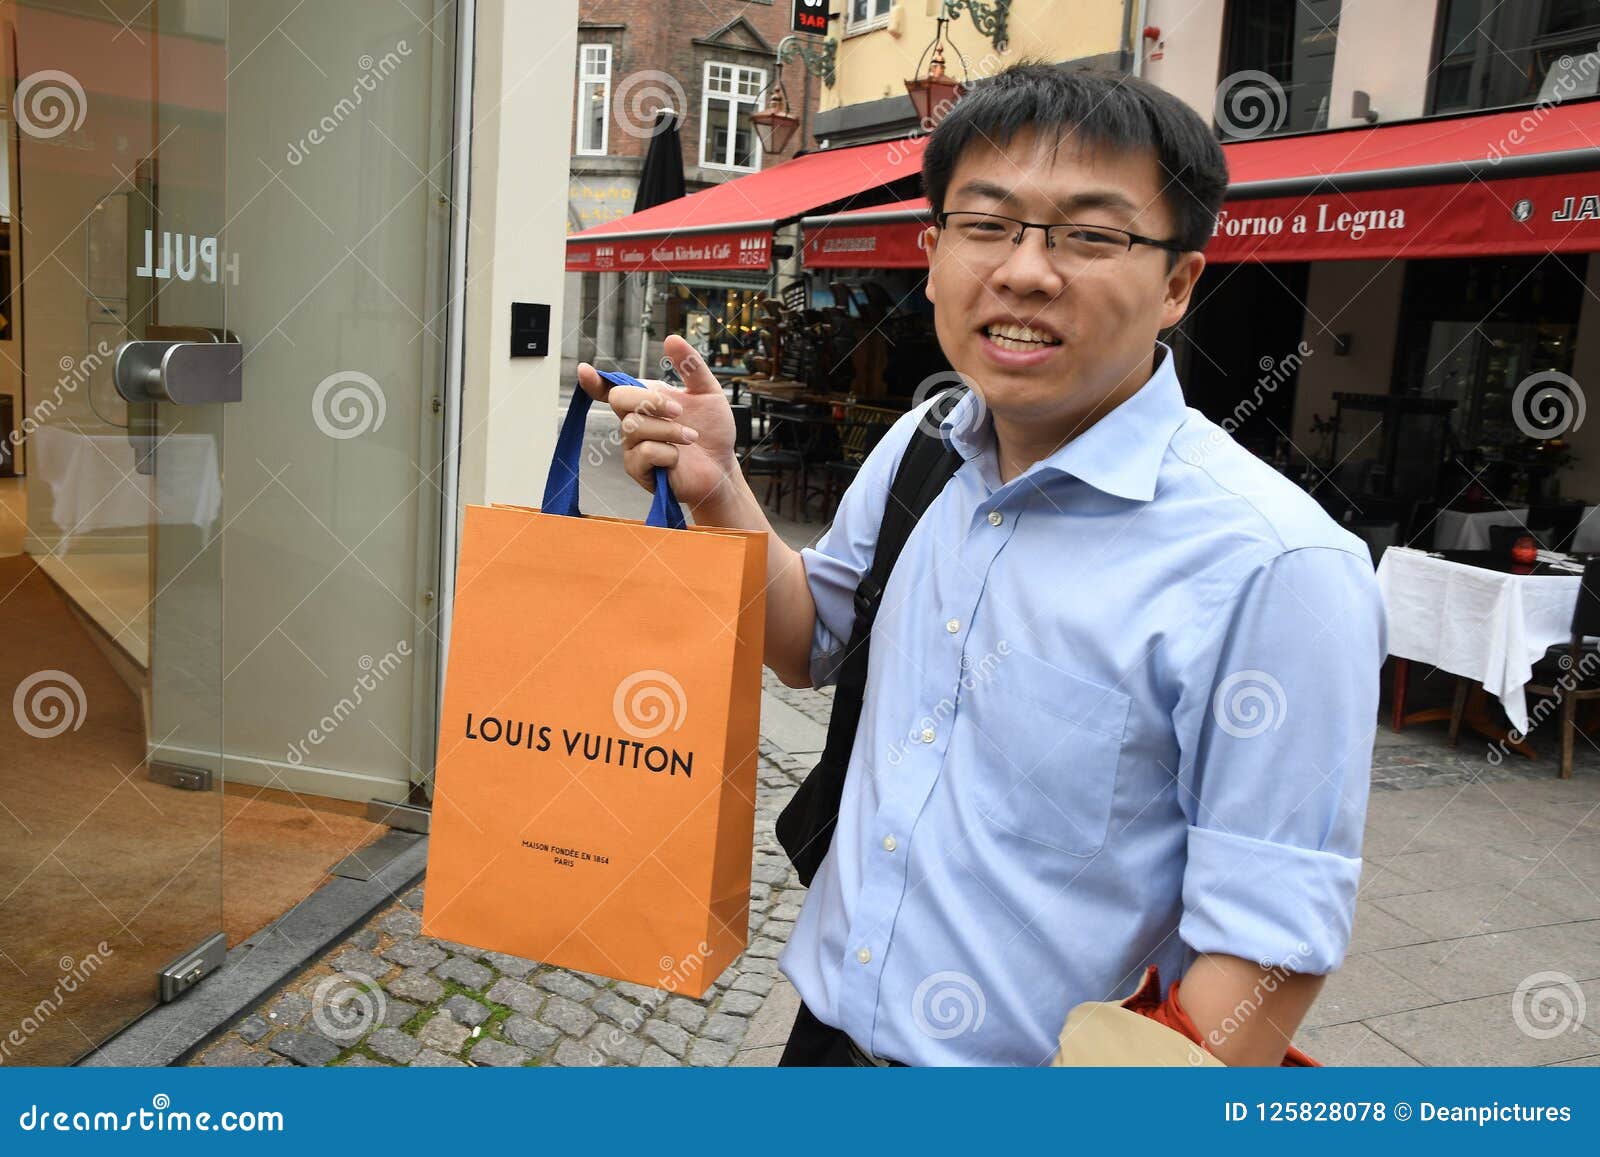 ASIAN LOUIS VUITTON SHOPPER WITH SHOPPING BAG Editorial Stock Photo - Image of danmark, consumer ...